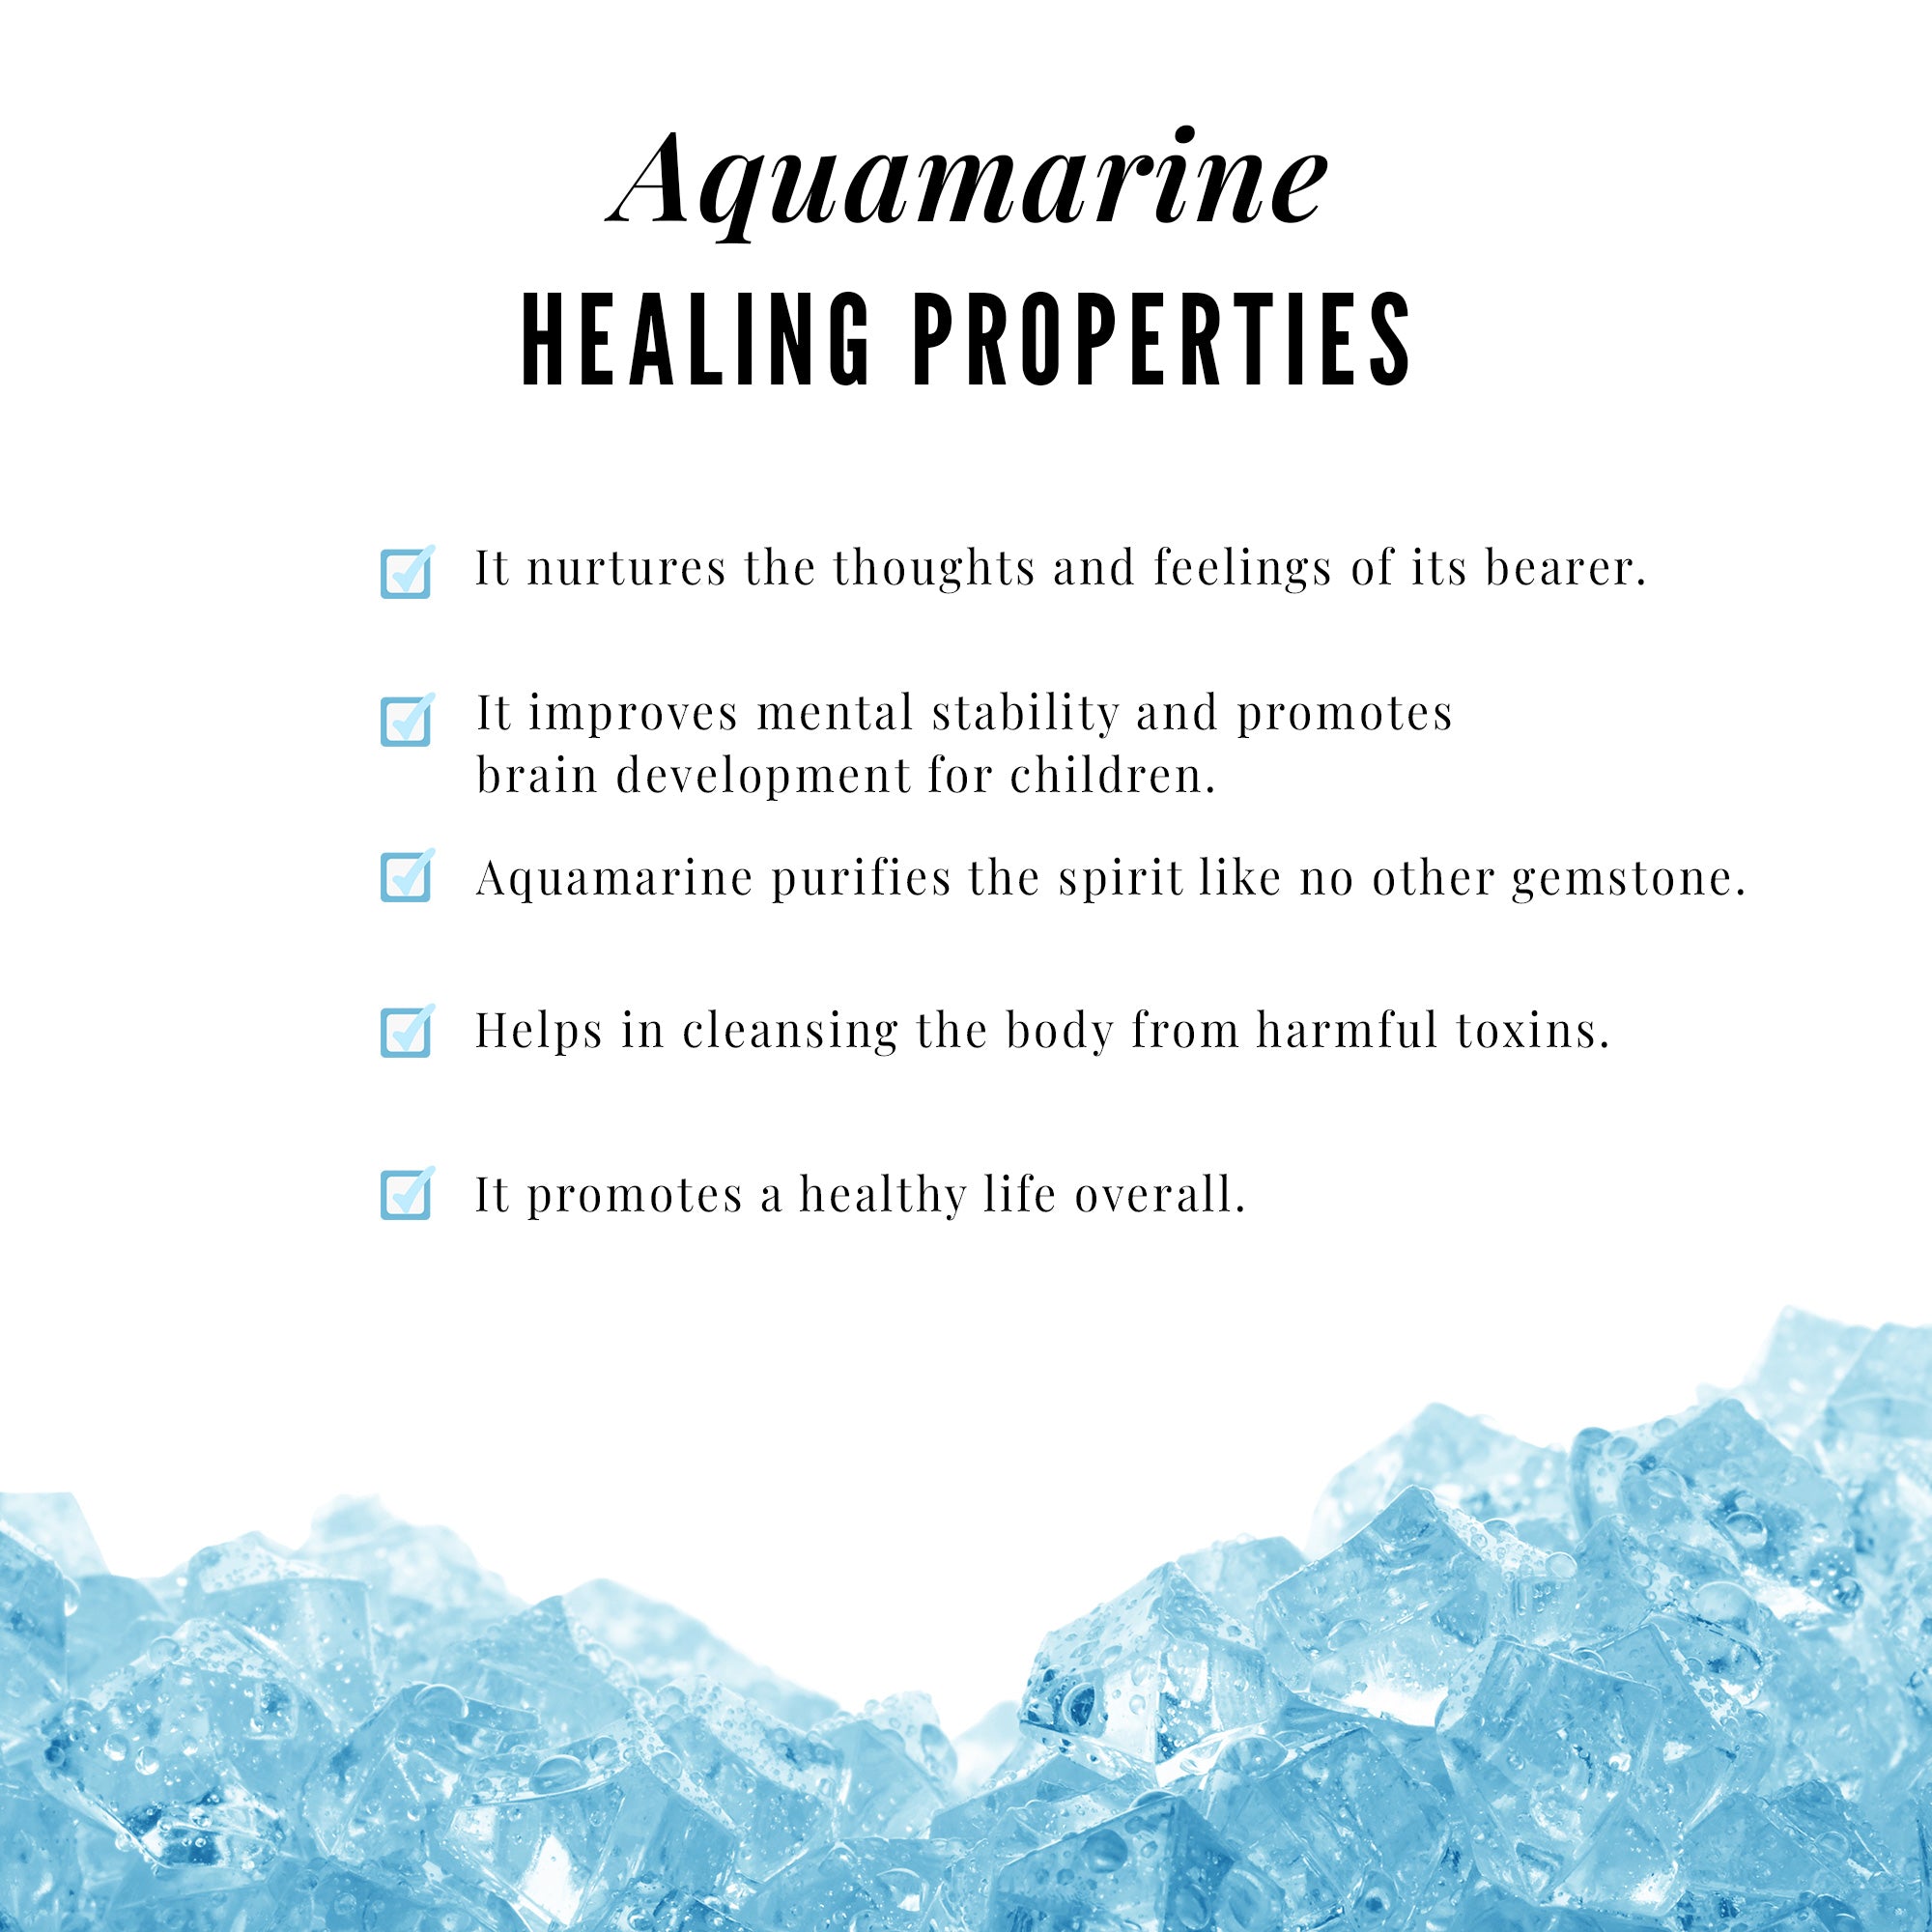 1/2 CT Aquamarine and Diamond Engagement Ring Aquamarine - ( AAA ) - Quality - Rosec Jewels